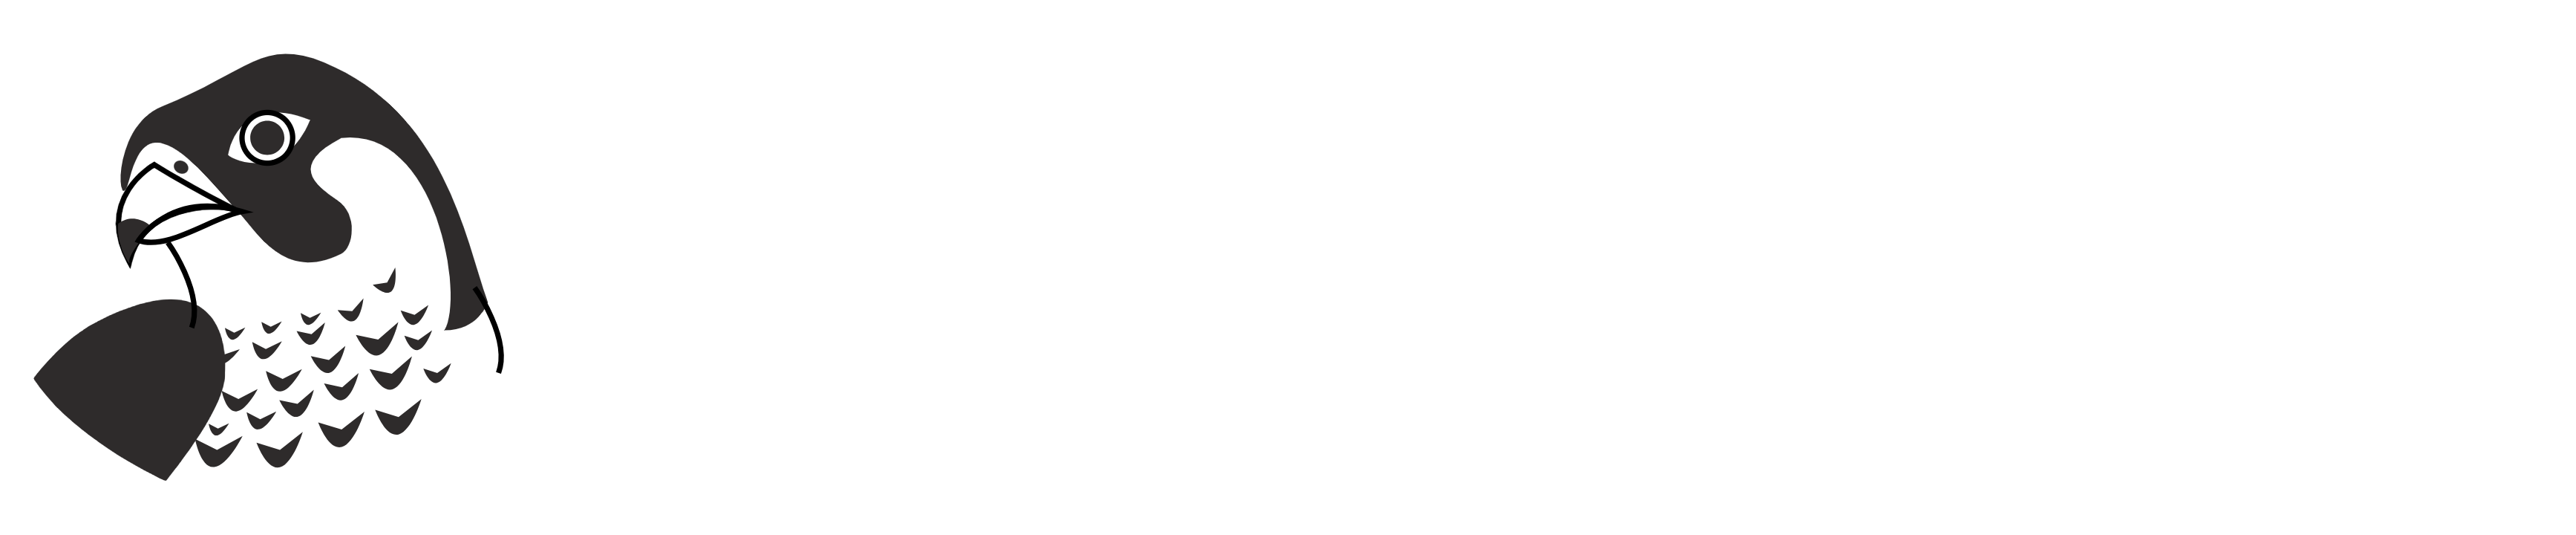 Royal Falcon Foundation